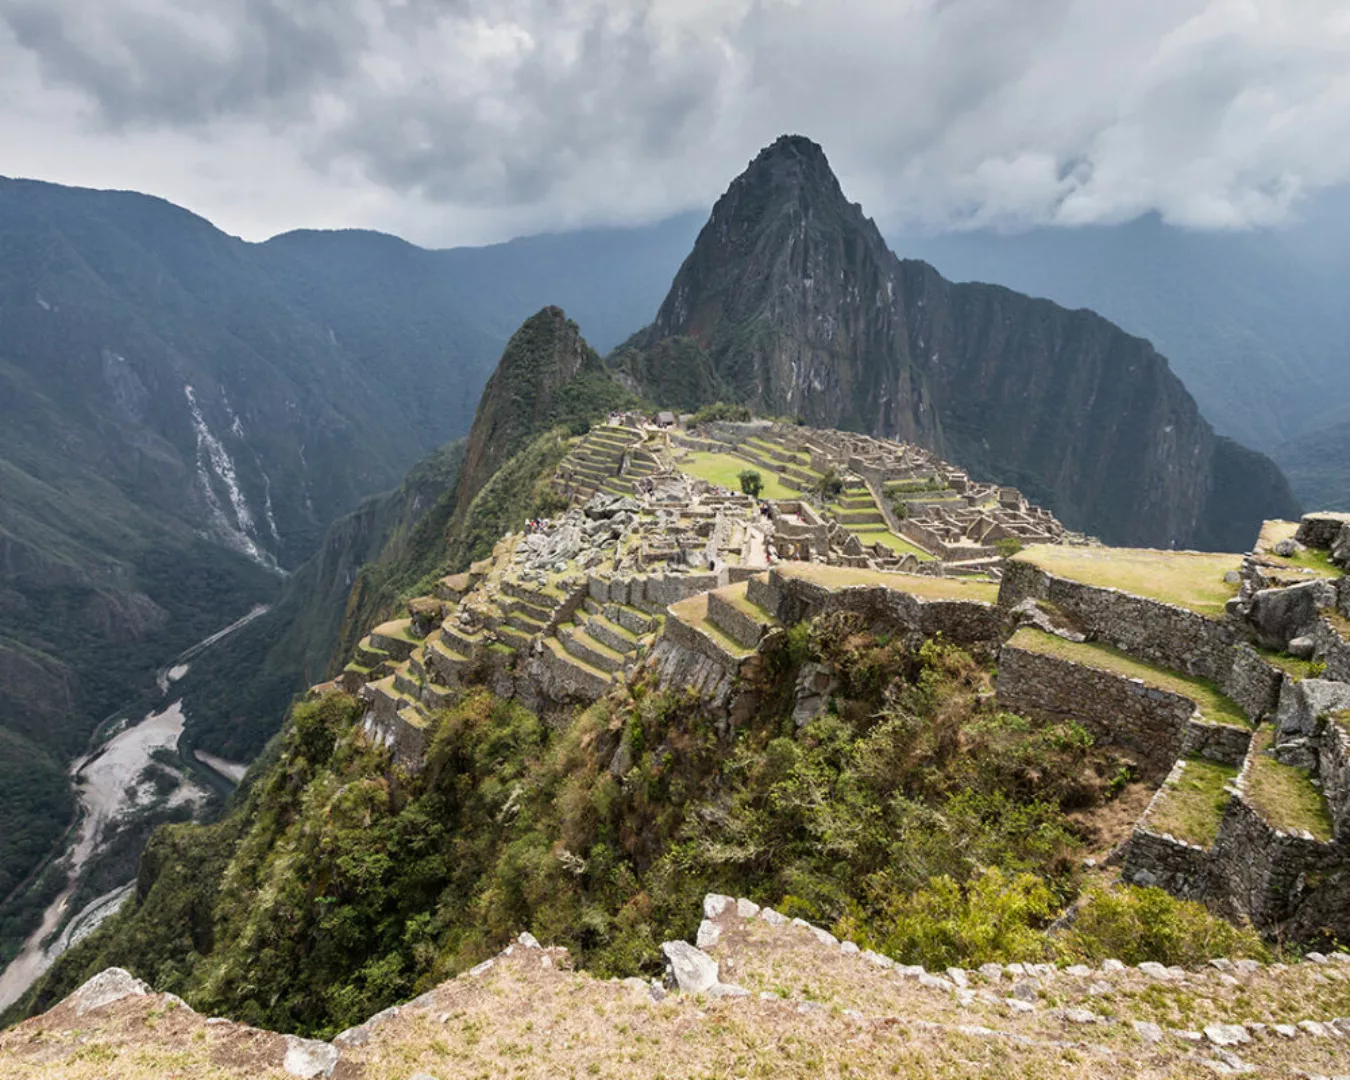 Fototapete "Machu Picchu" 4,00x2,50 m / Glattvlies Brillant günstig online kaufen